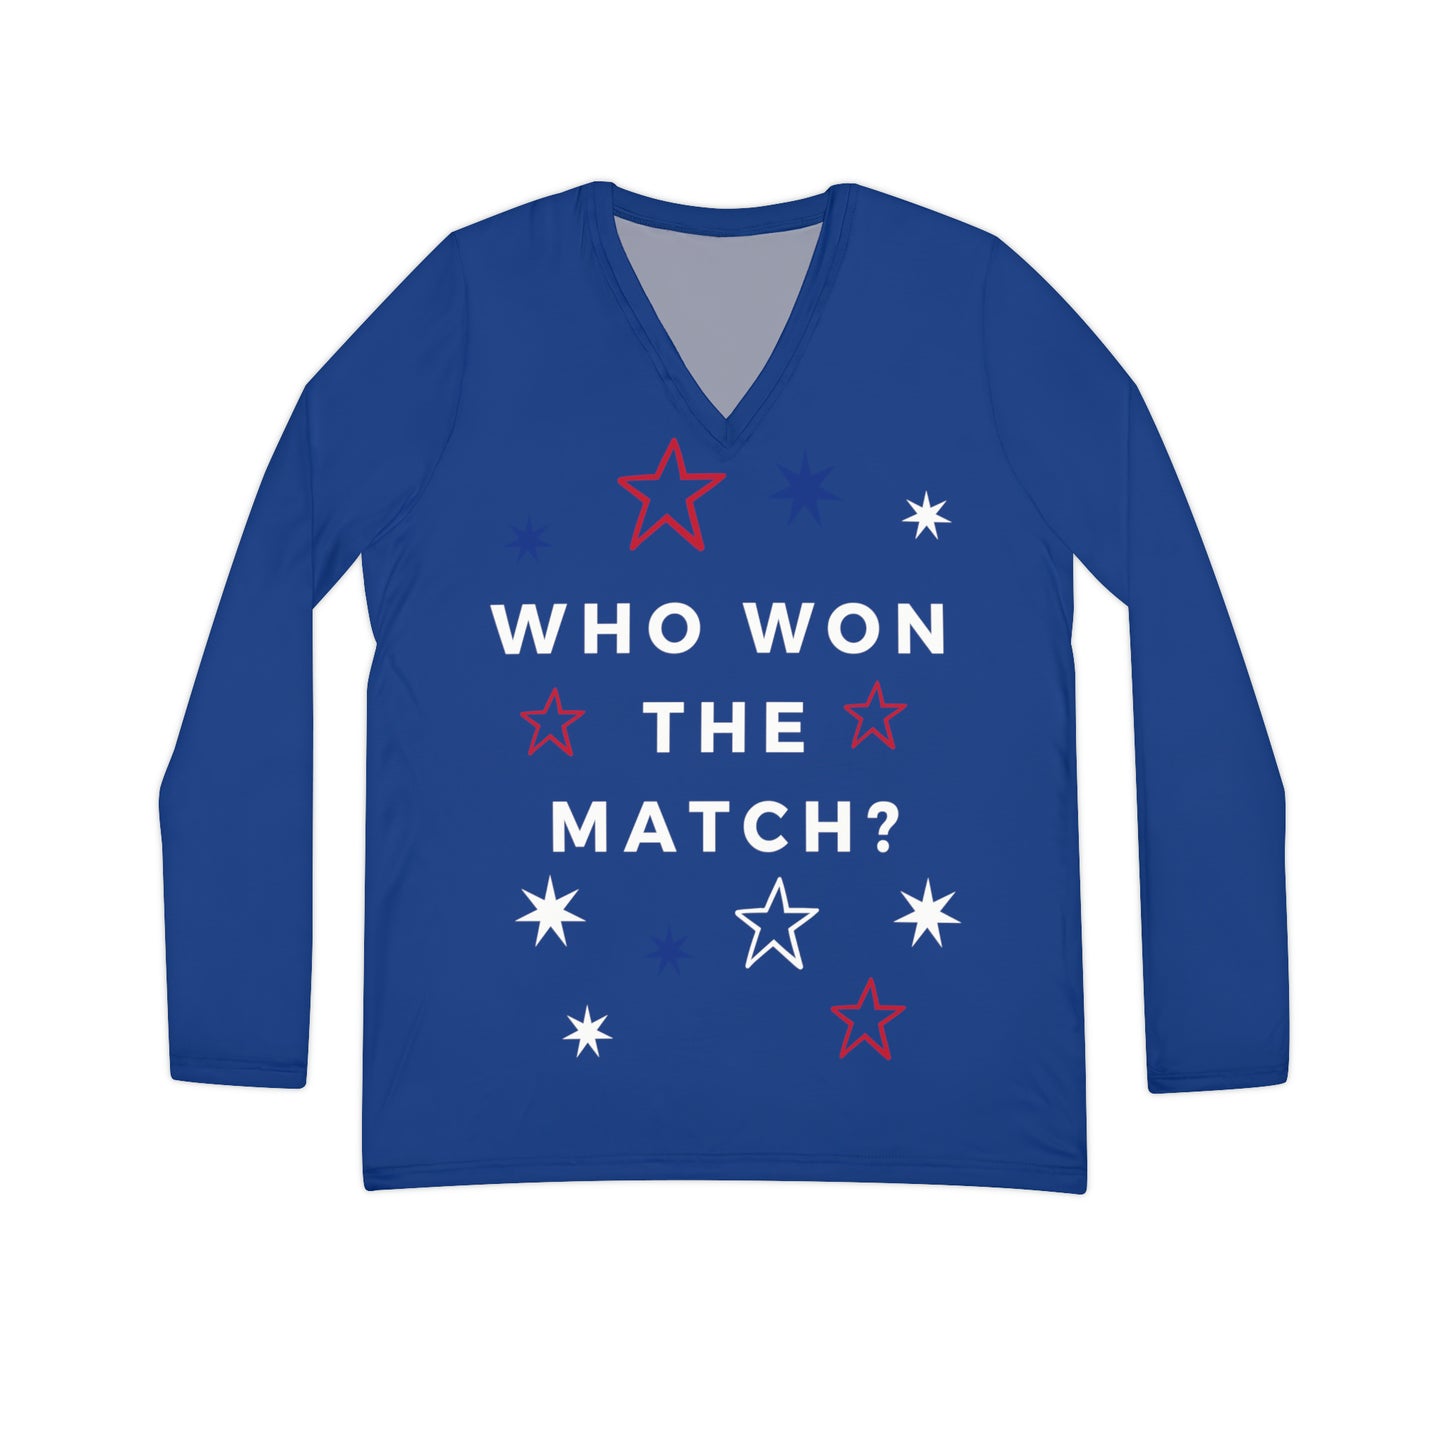 WHO WON THE MATCH Women's Long Sleeve V-neck Shirt